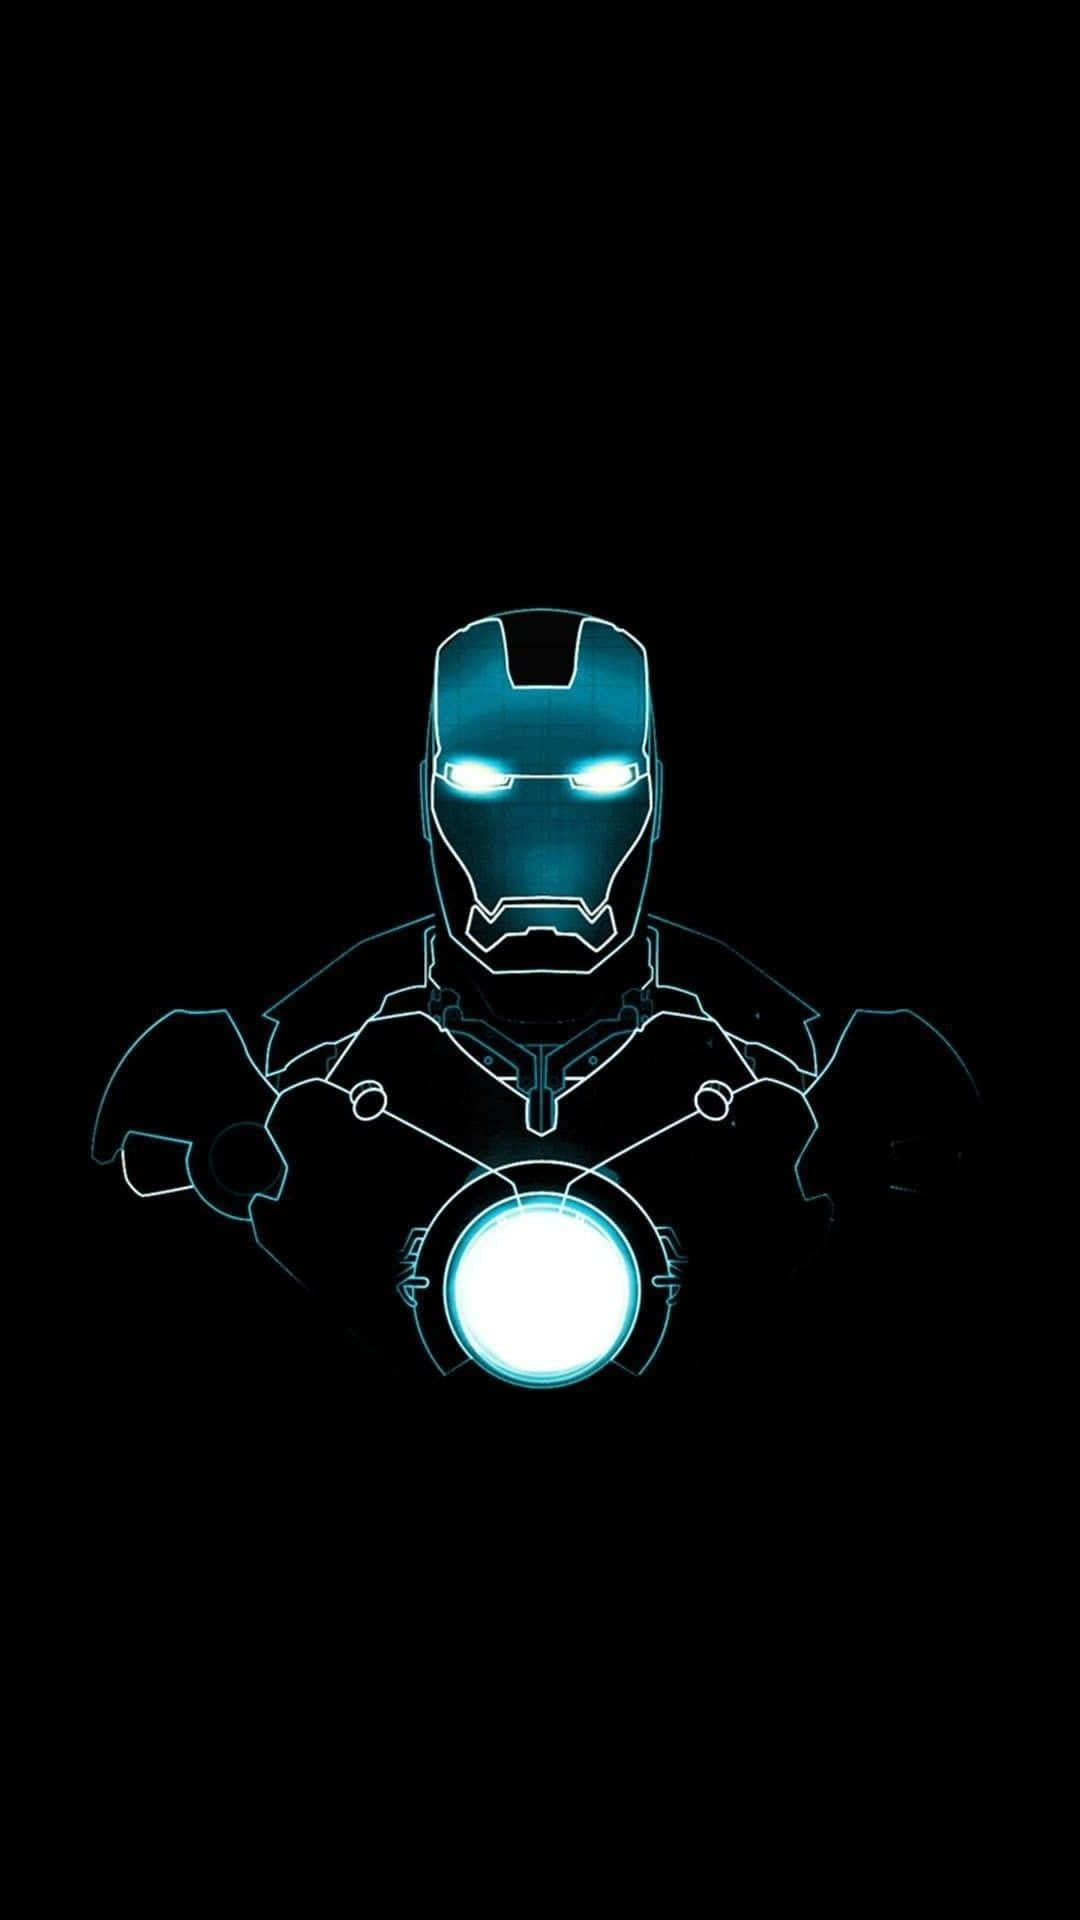 Cool Iron Man Arc Reactor iPhone Wallpaper